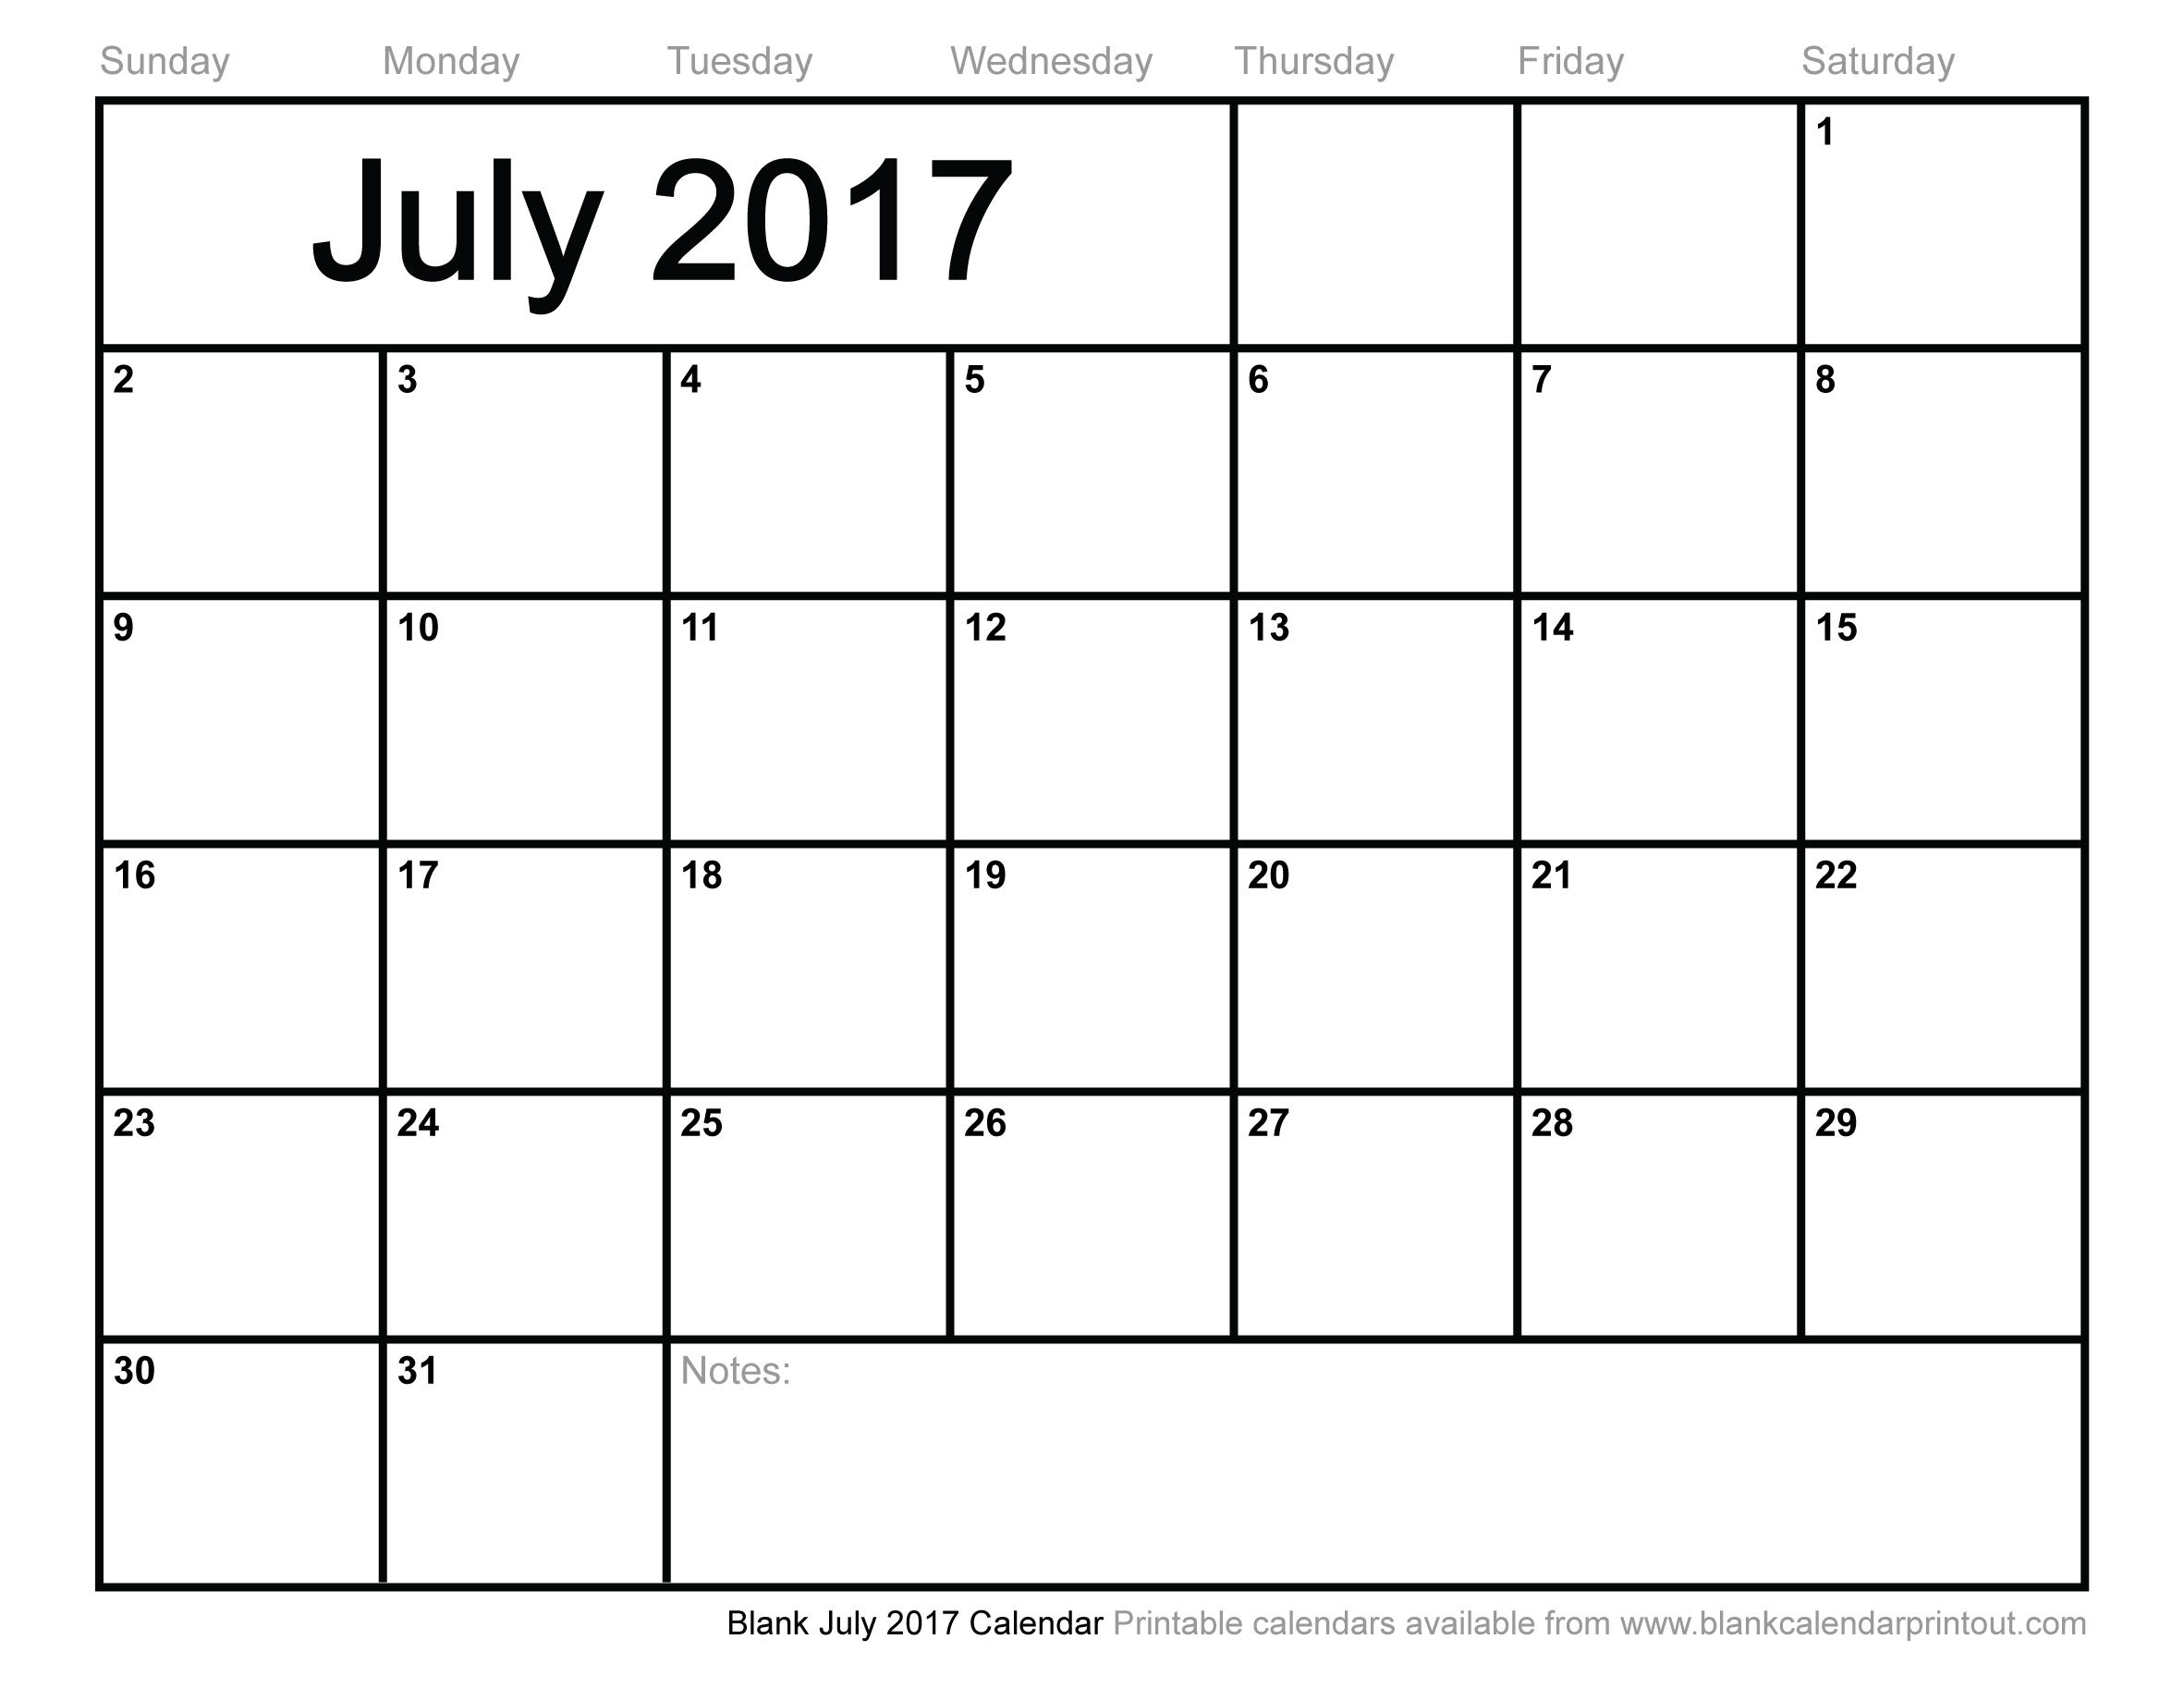 Blank July 2017 Calendar to Print